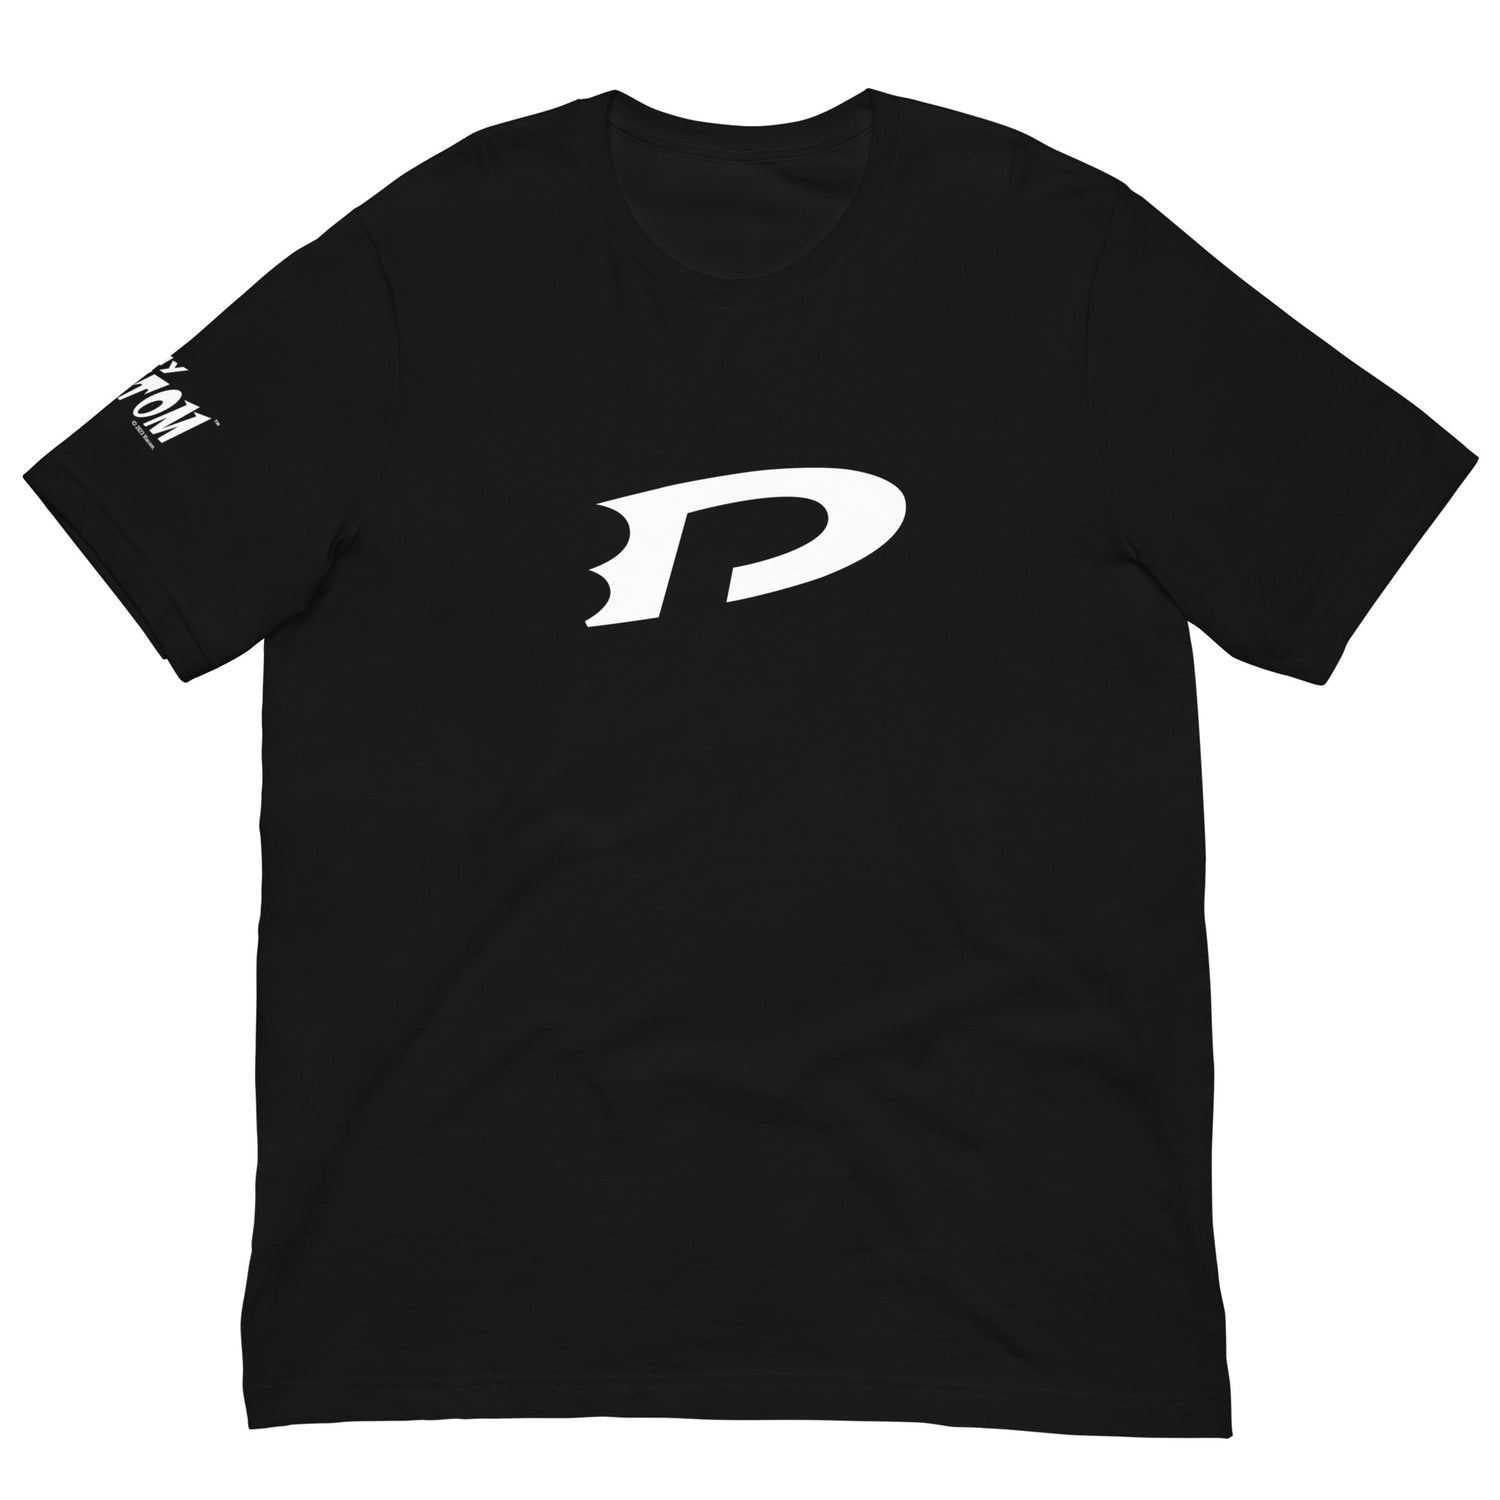 Danny Phantom Logo Adult Short Sleeve T-Shirt